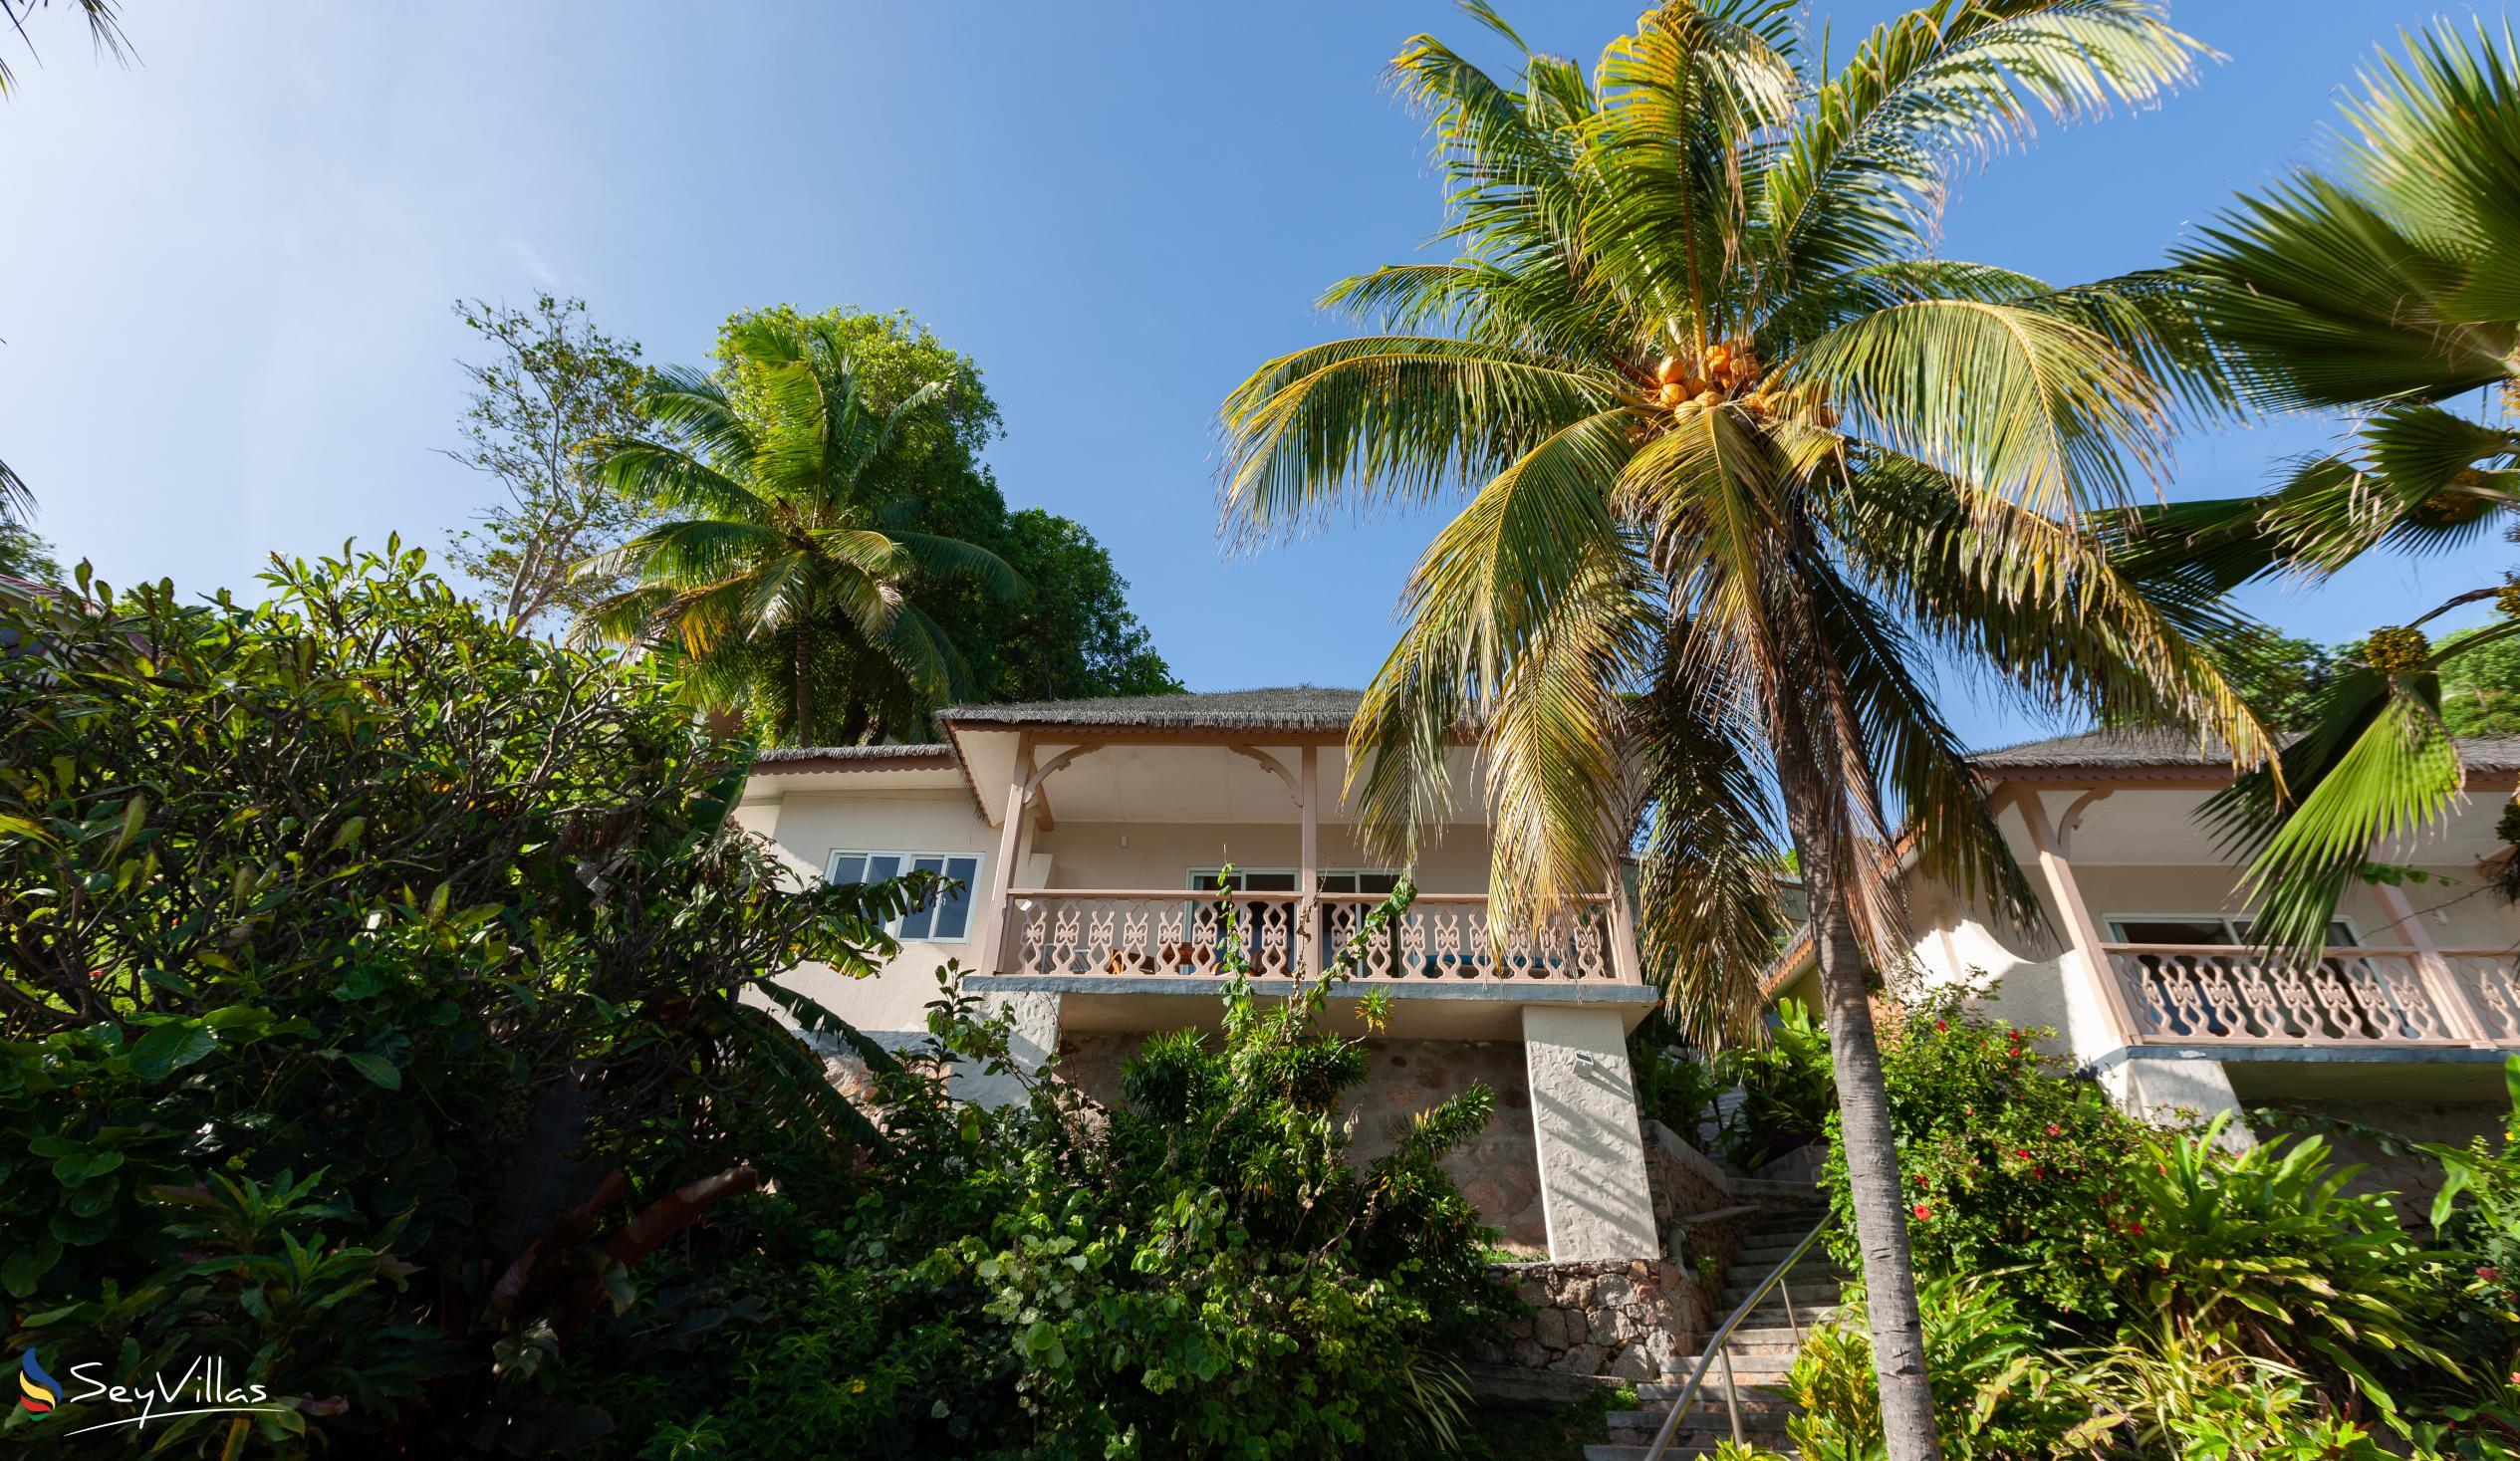 Photo 88: Patatran Village Hotel - Family Room - La Digue (Seychelles)